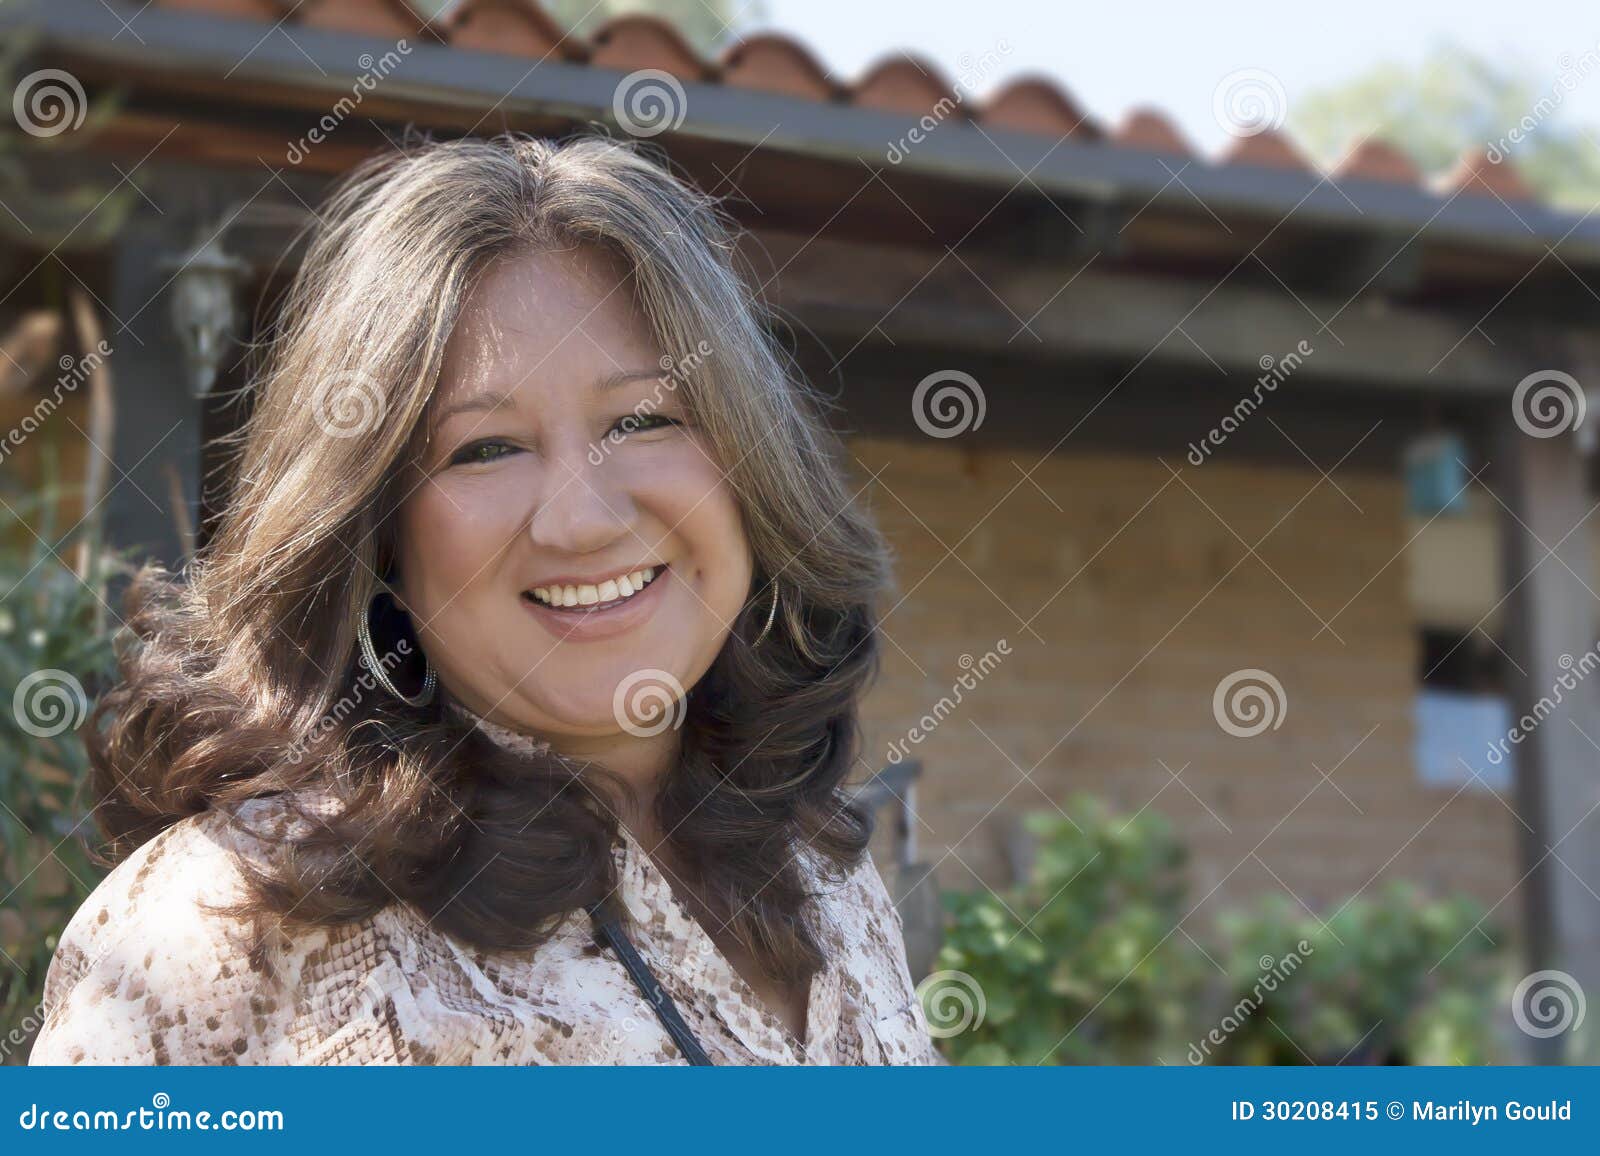 senior hispanic woman